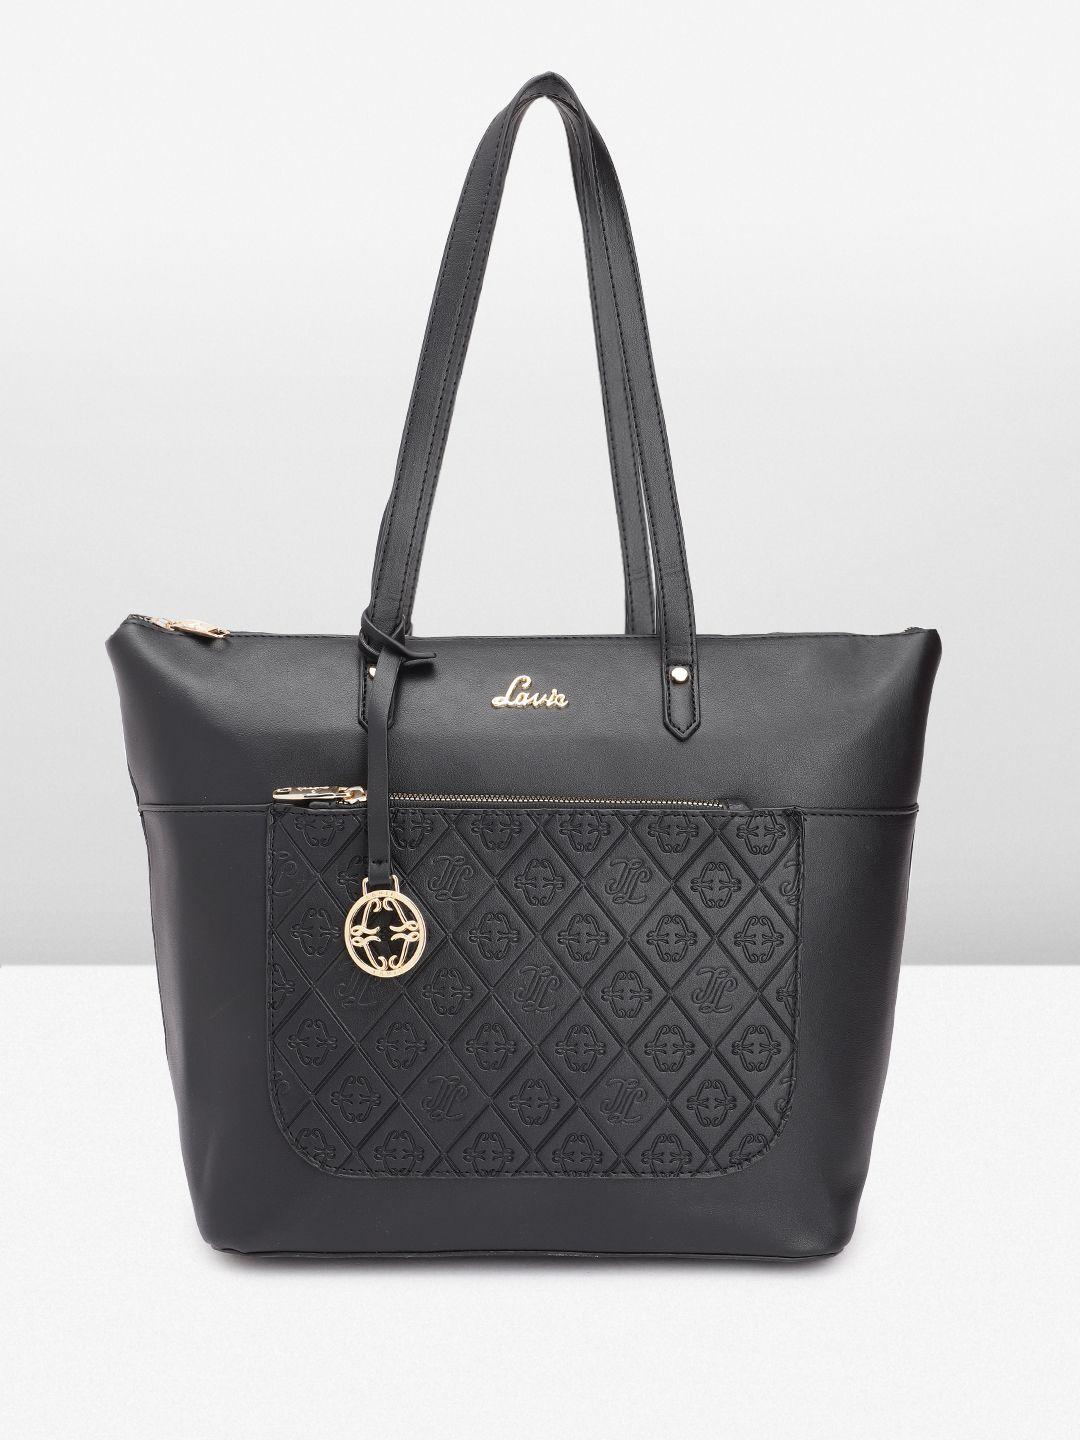 lavie brand logo textured structured shoulder bag with tasselled detail